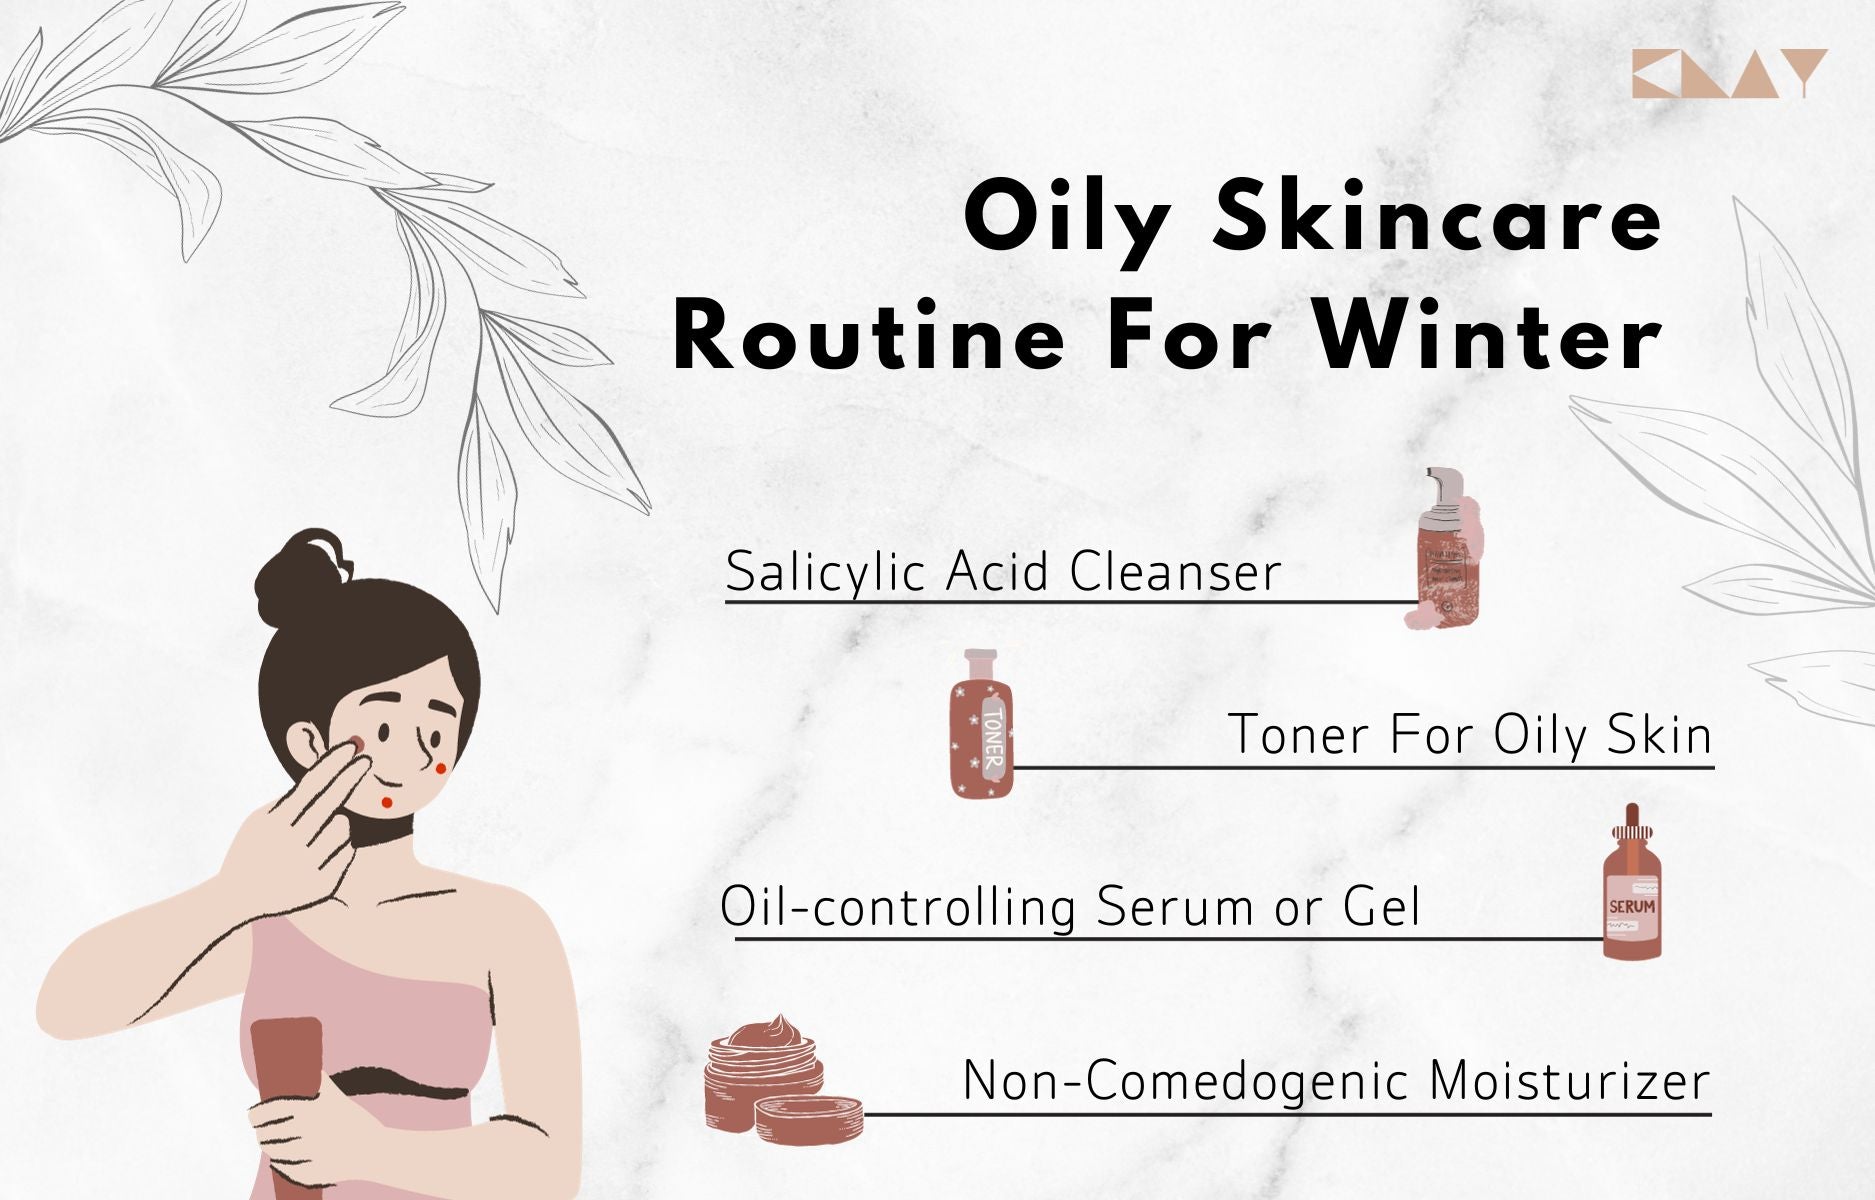 Oily Skincare Routine For Winter